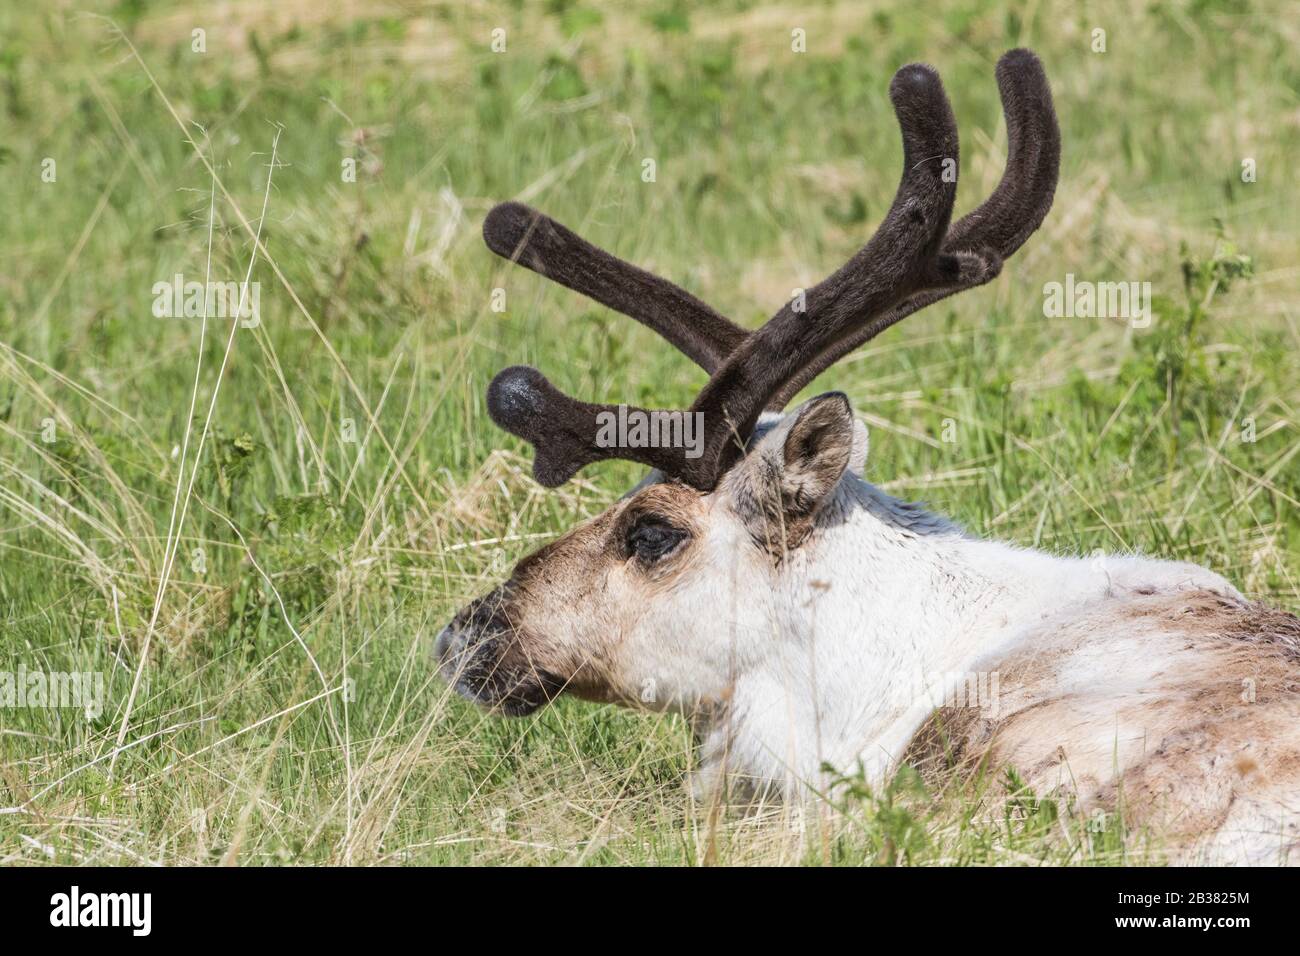 Rentier im Bast, Rangifer tarandus / Reindeer in bast, Rangifer tarandus Stock Photo